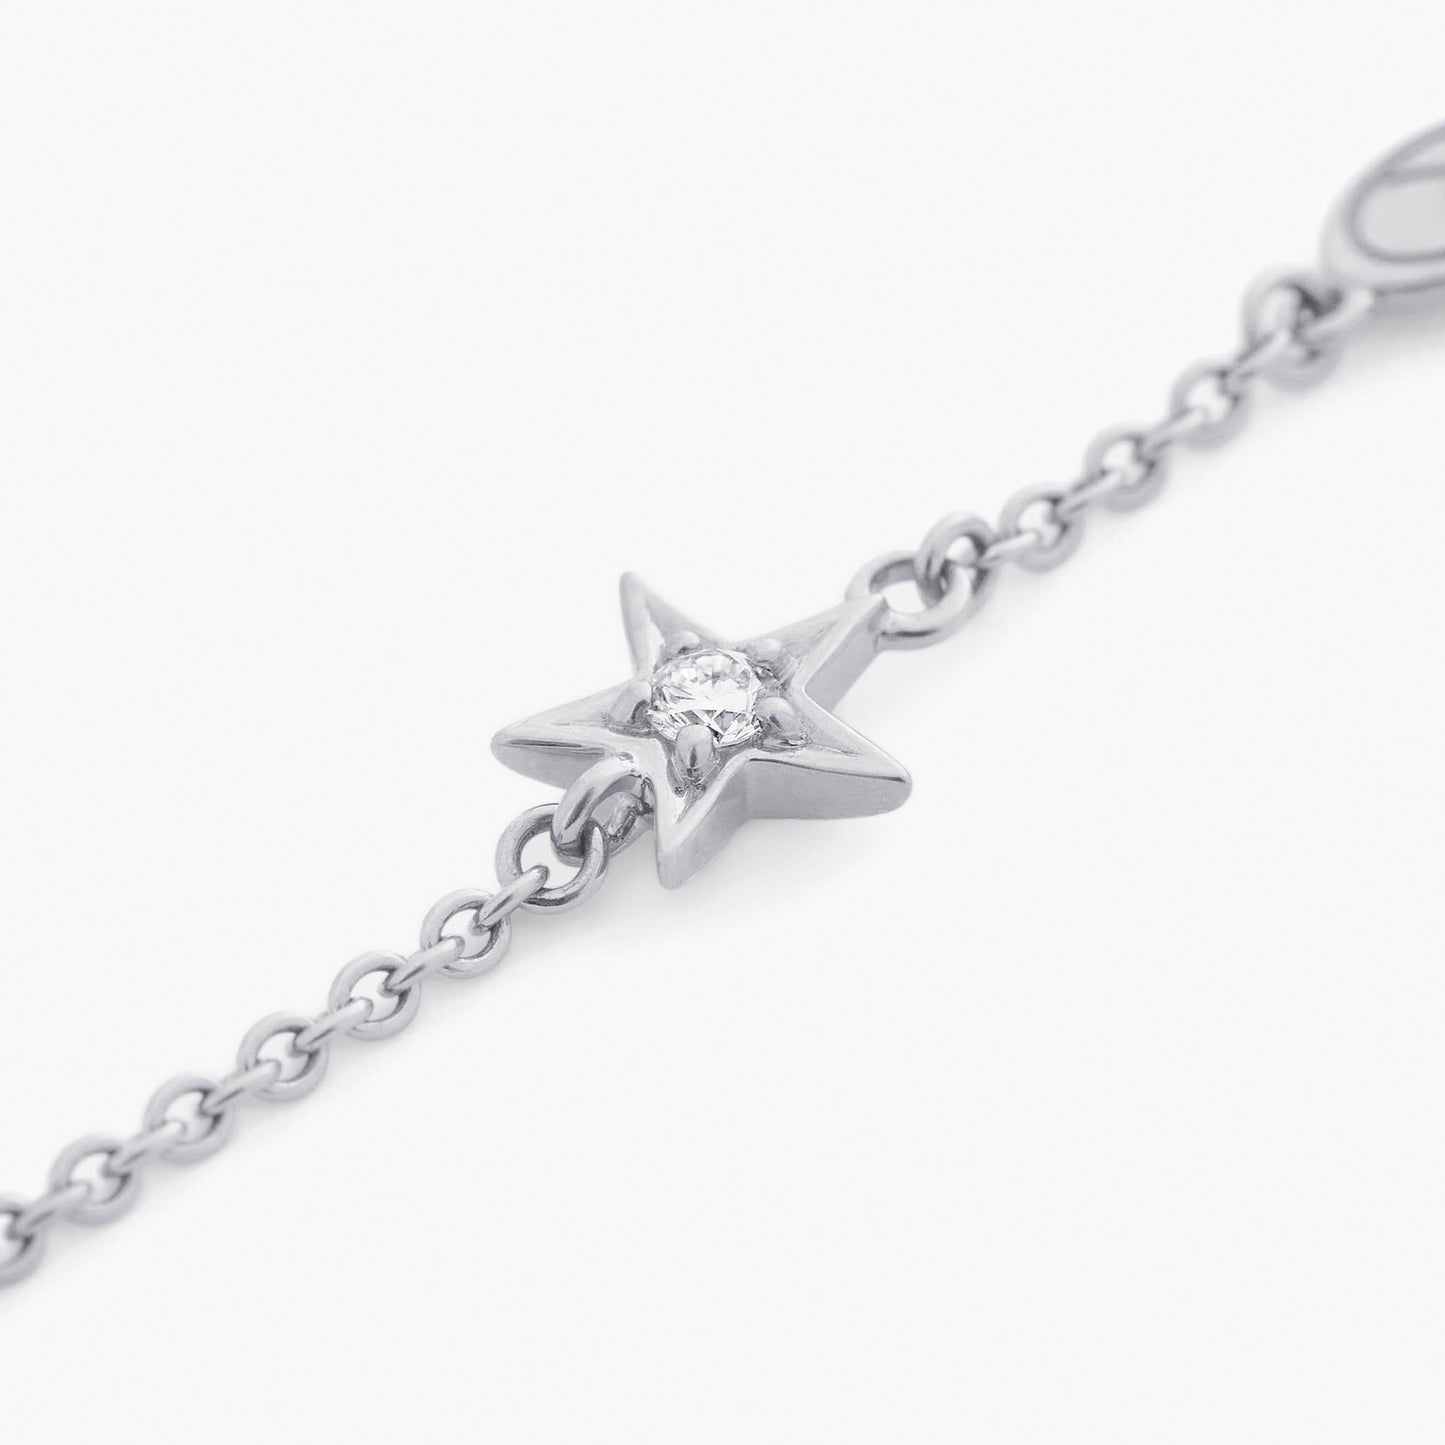 Guiding Star 18ct White Gold & Diamond Bracelet